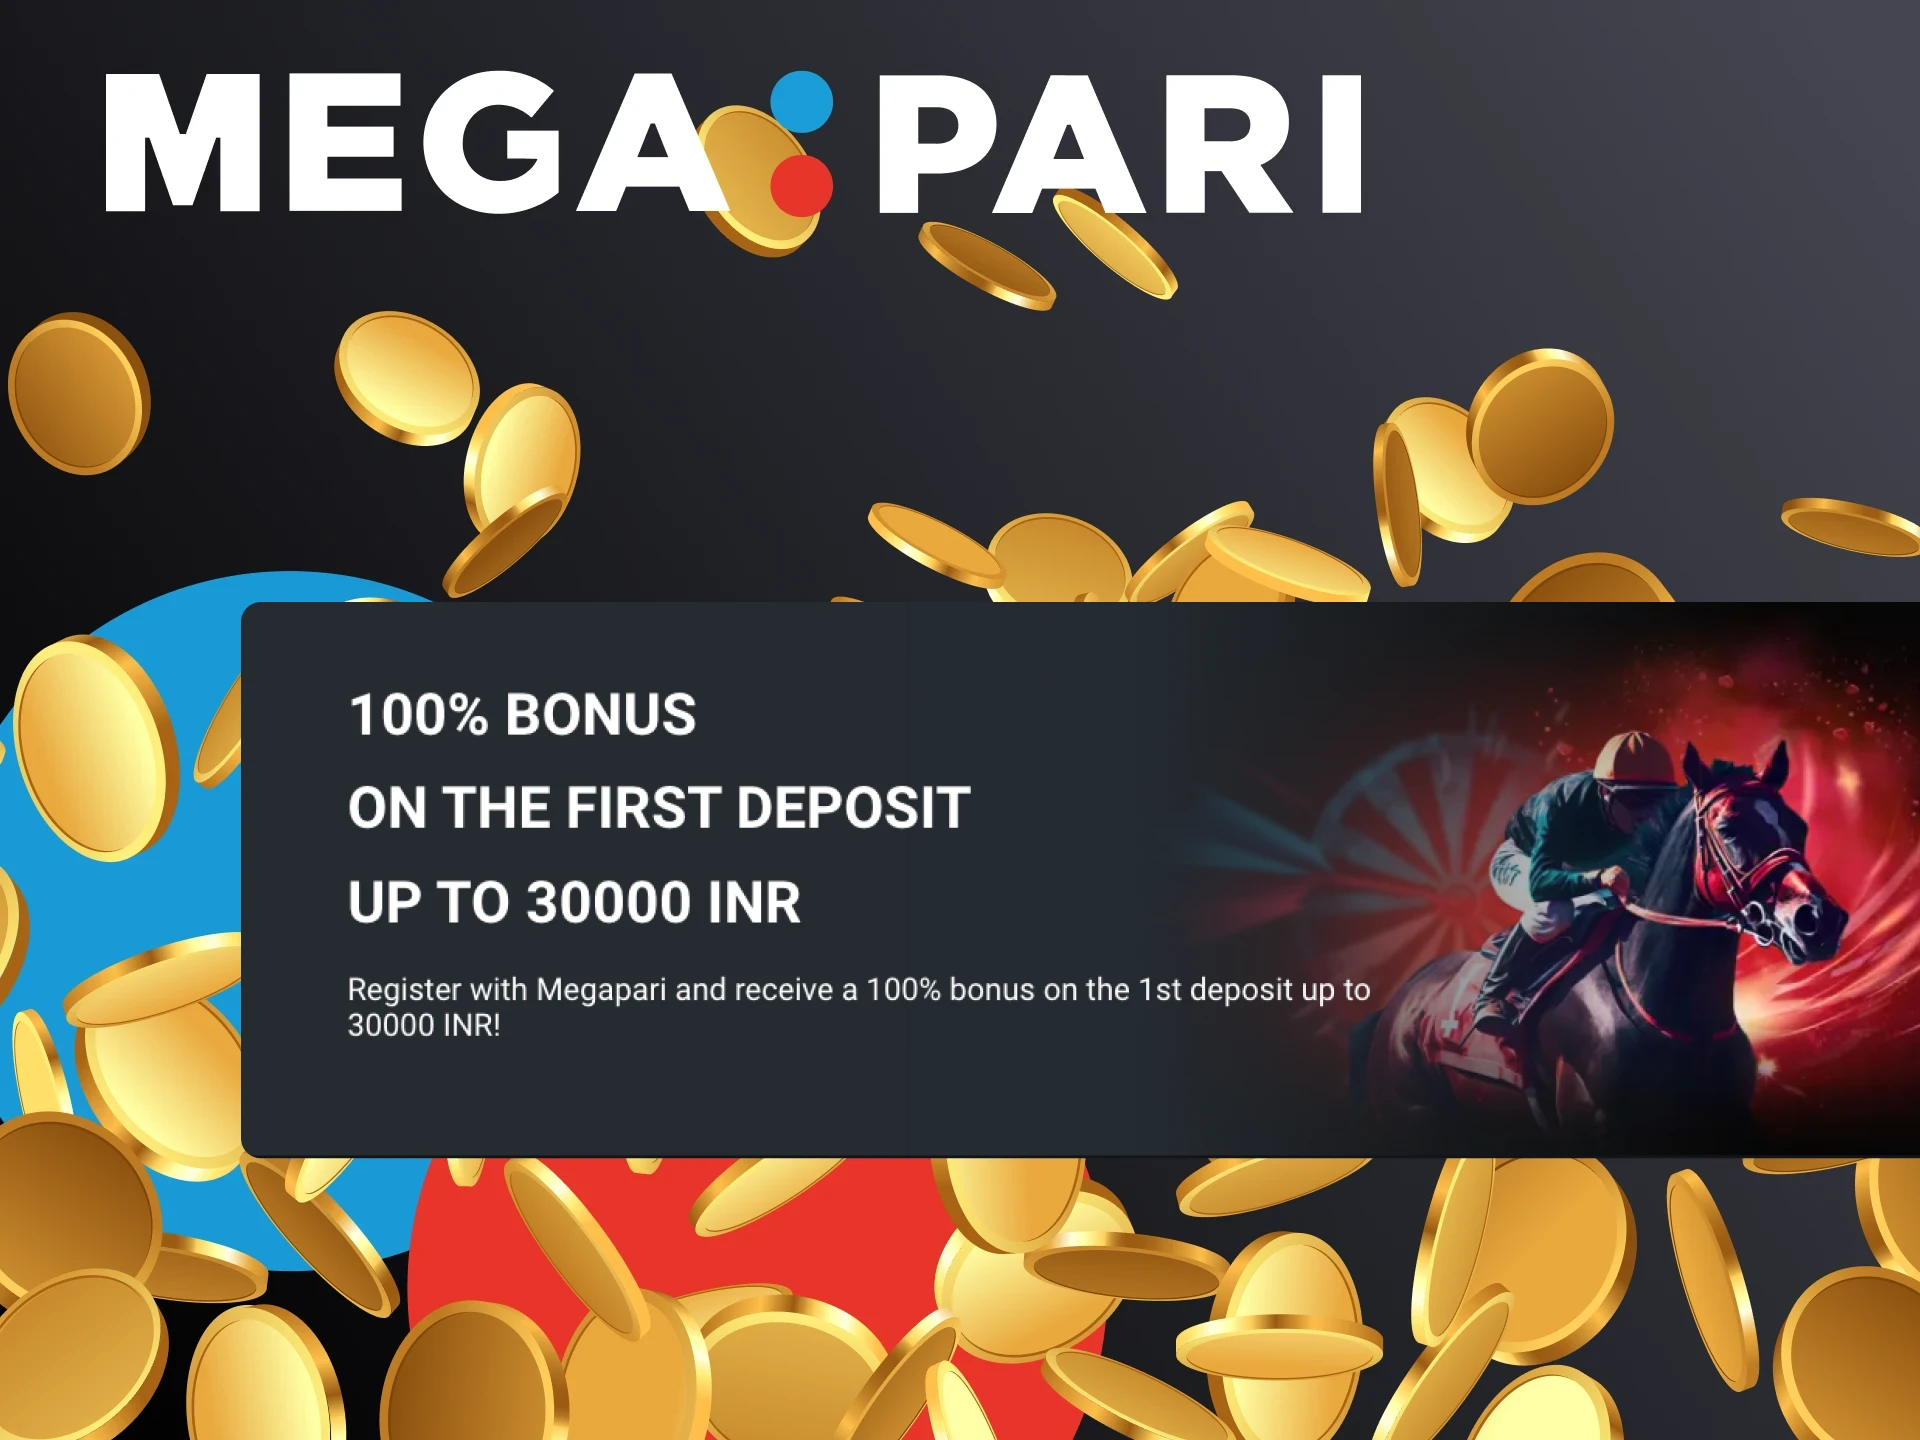 Get the Megapari welcome bonus and start play Casino.